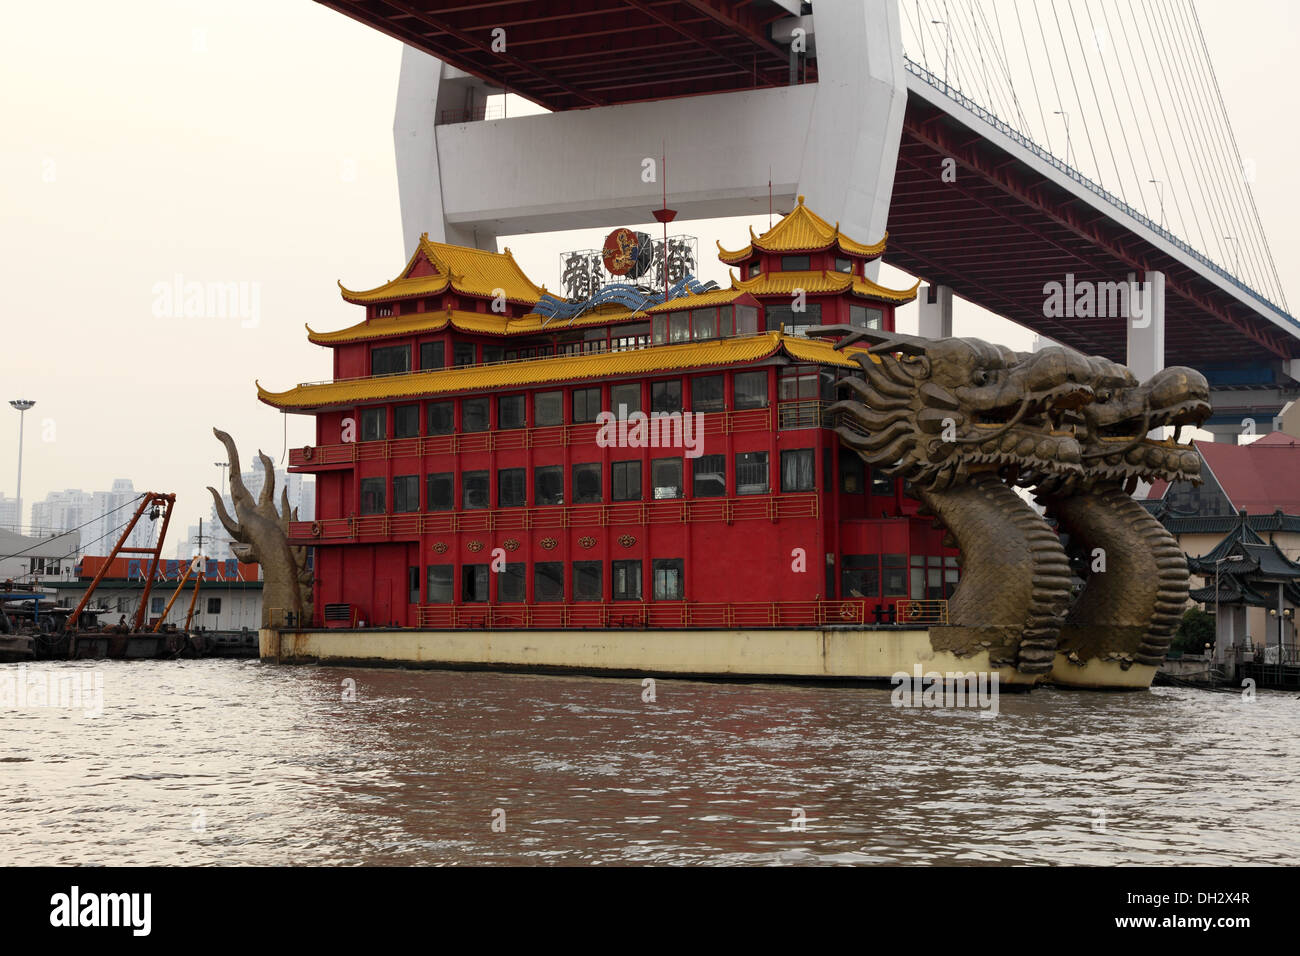 Dragon ship restaurant on Huangpu river in Shanghai, China Stock Photo